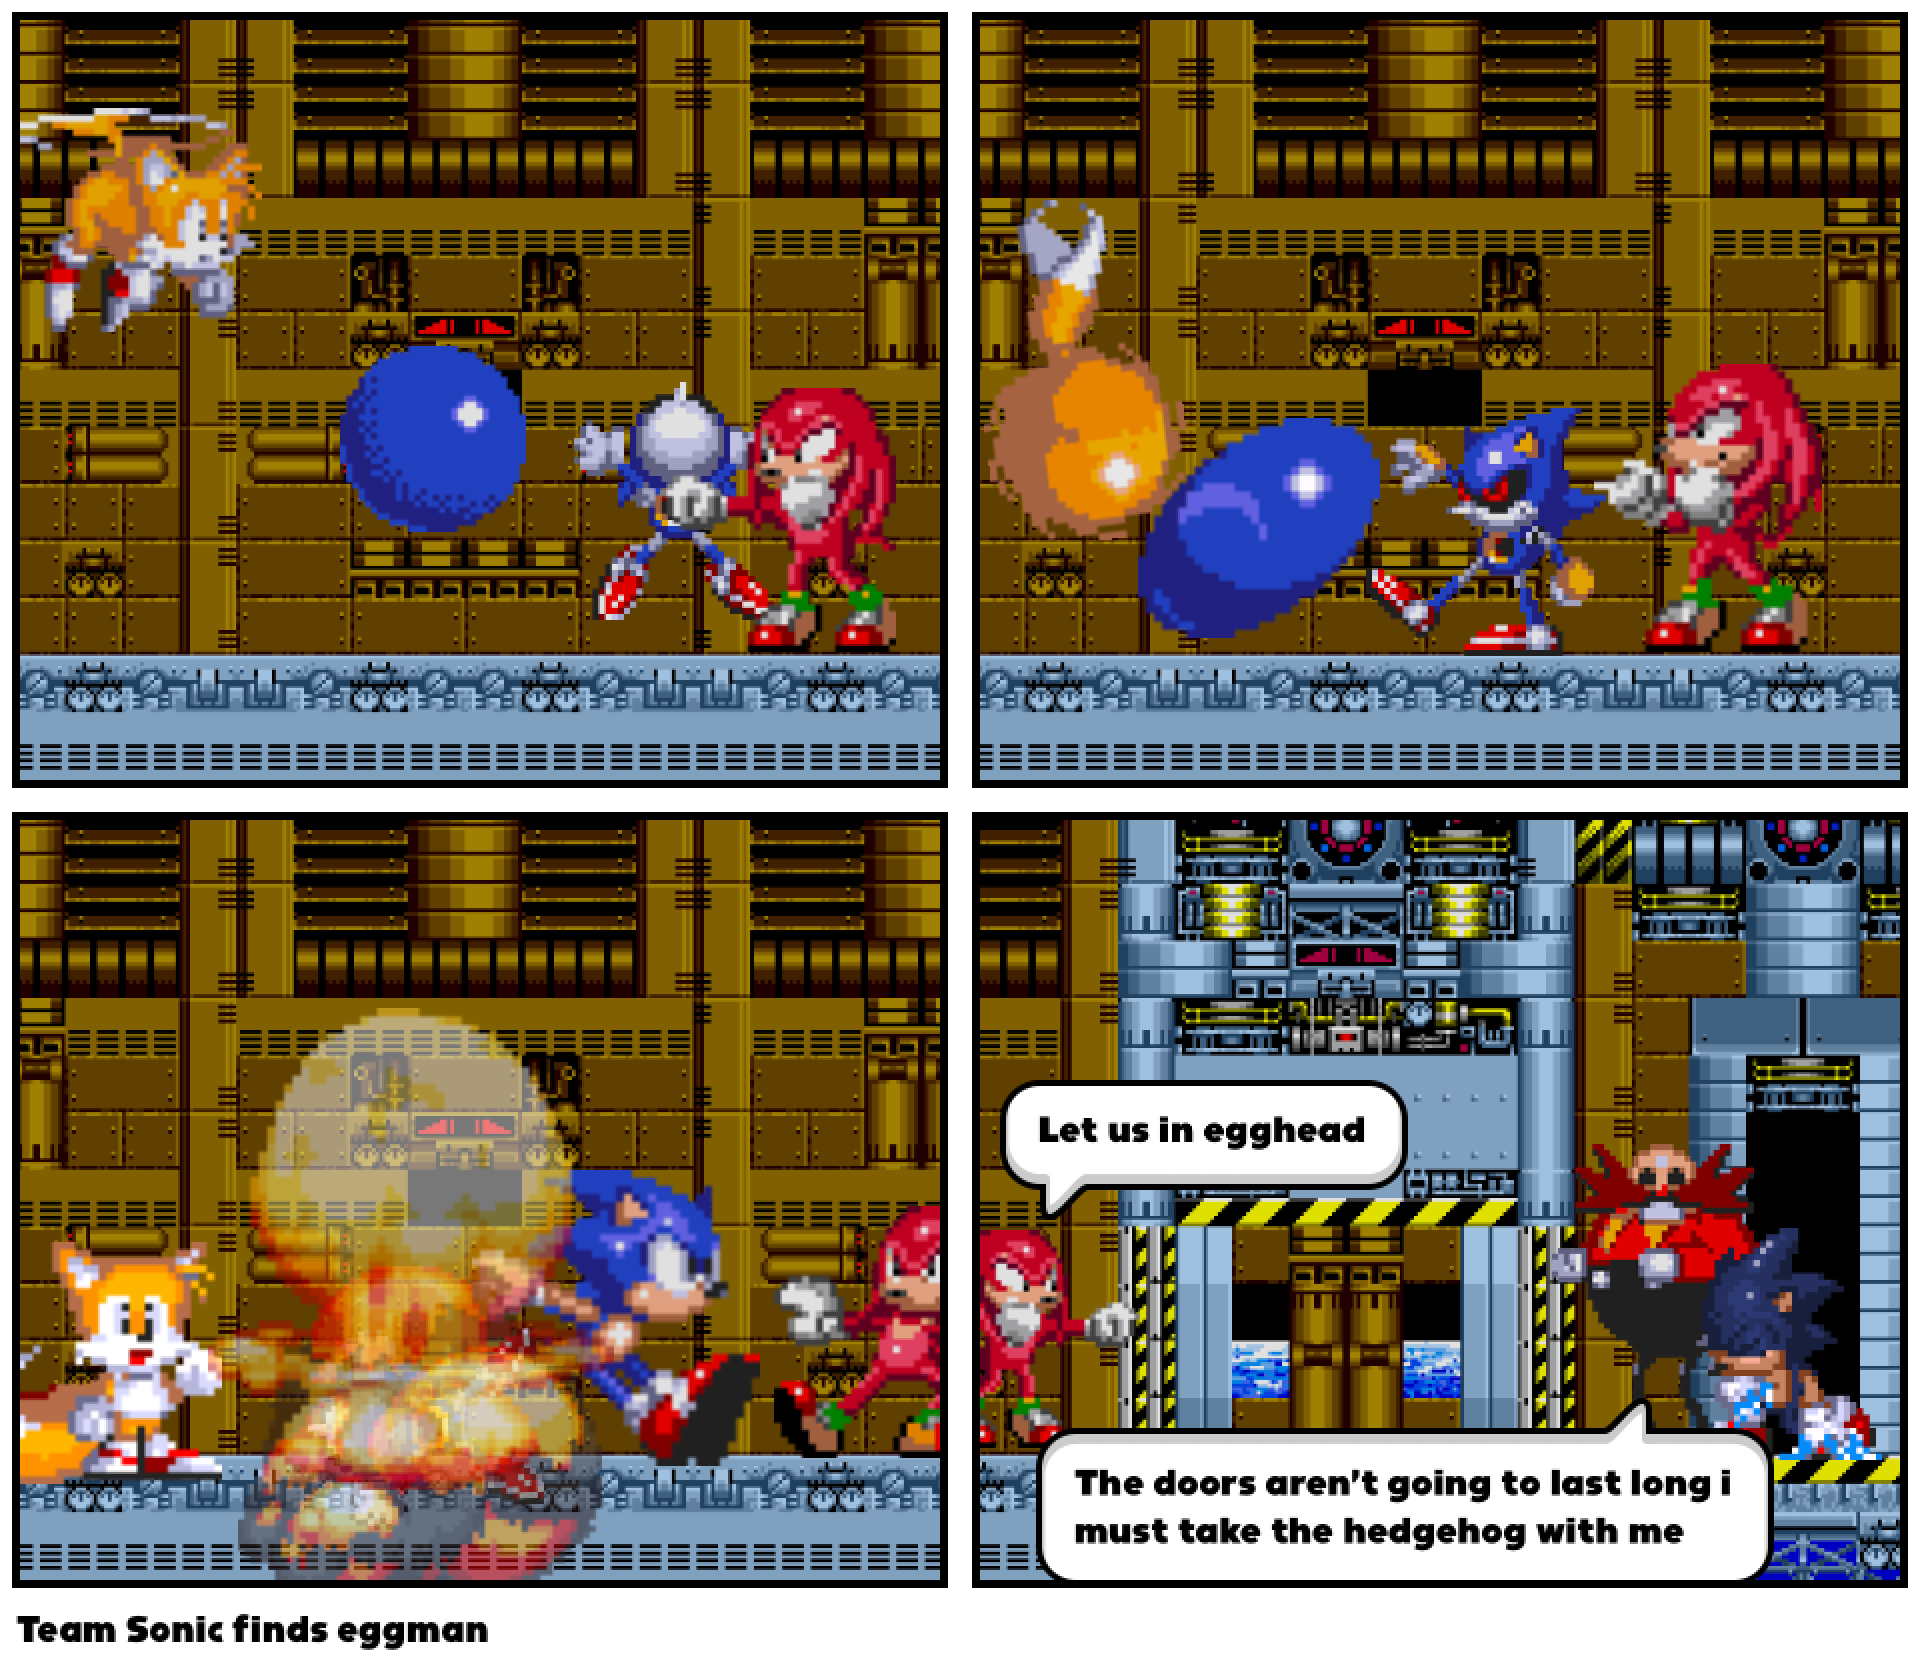 Team Sonic finds eggman